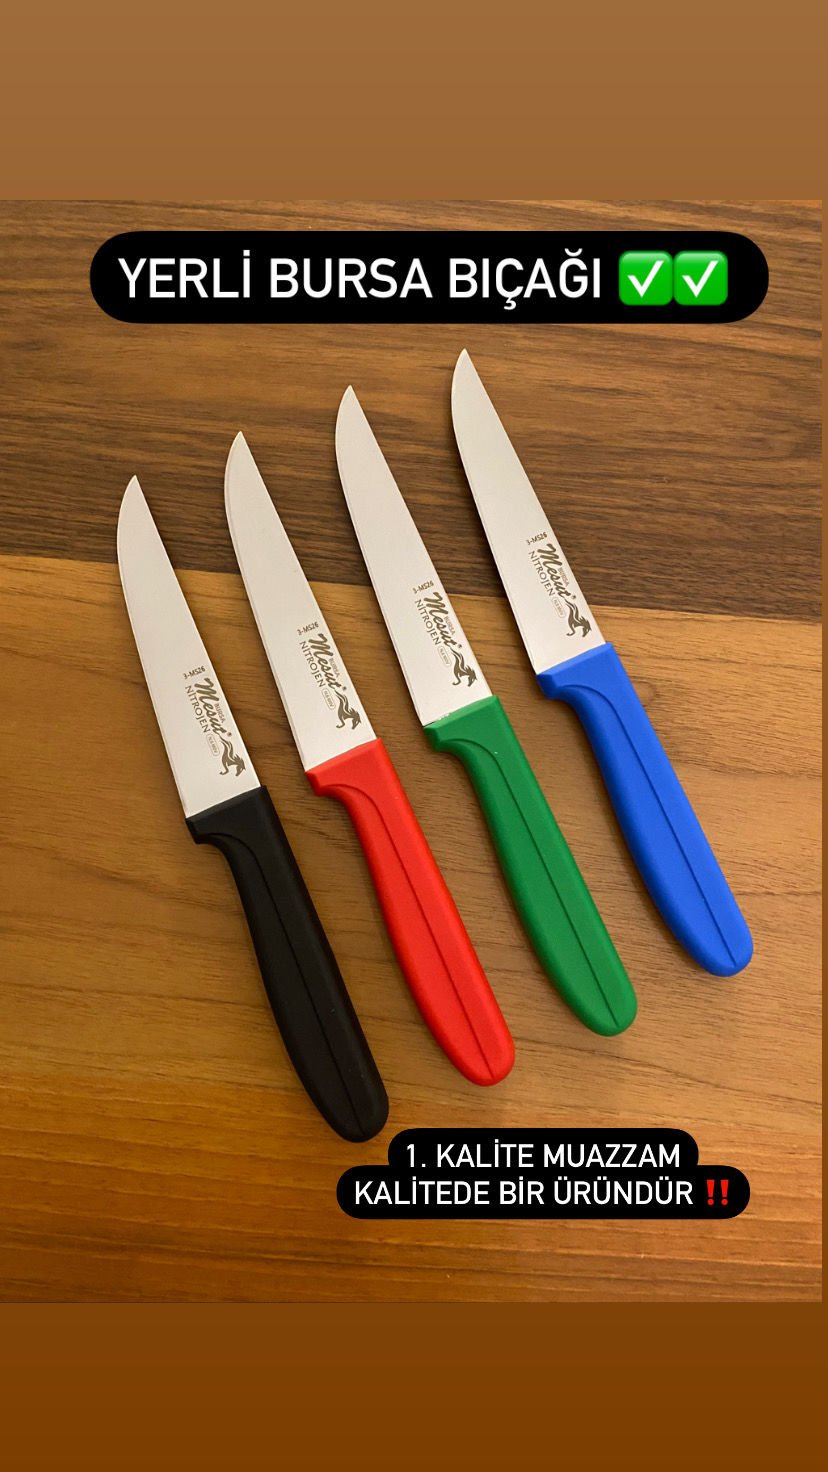 Bursa Bıçağı Genel mutfak bıçağı  25 cm